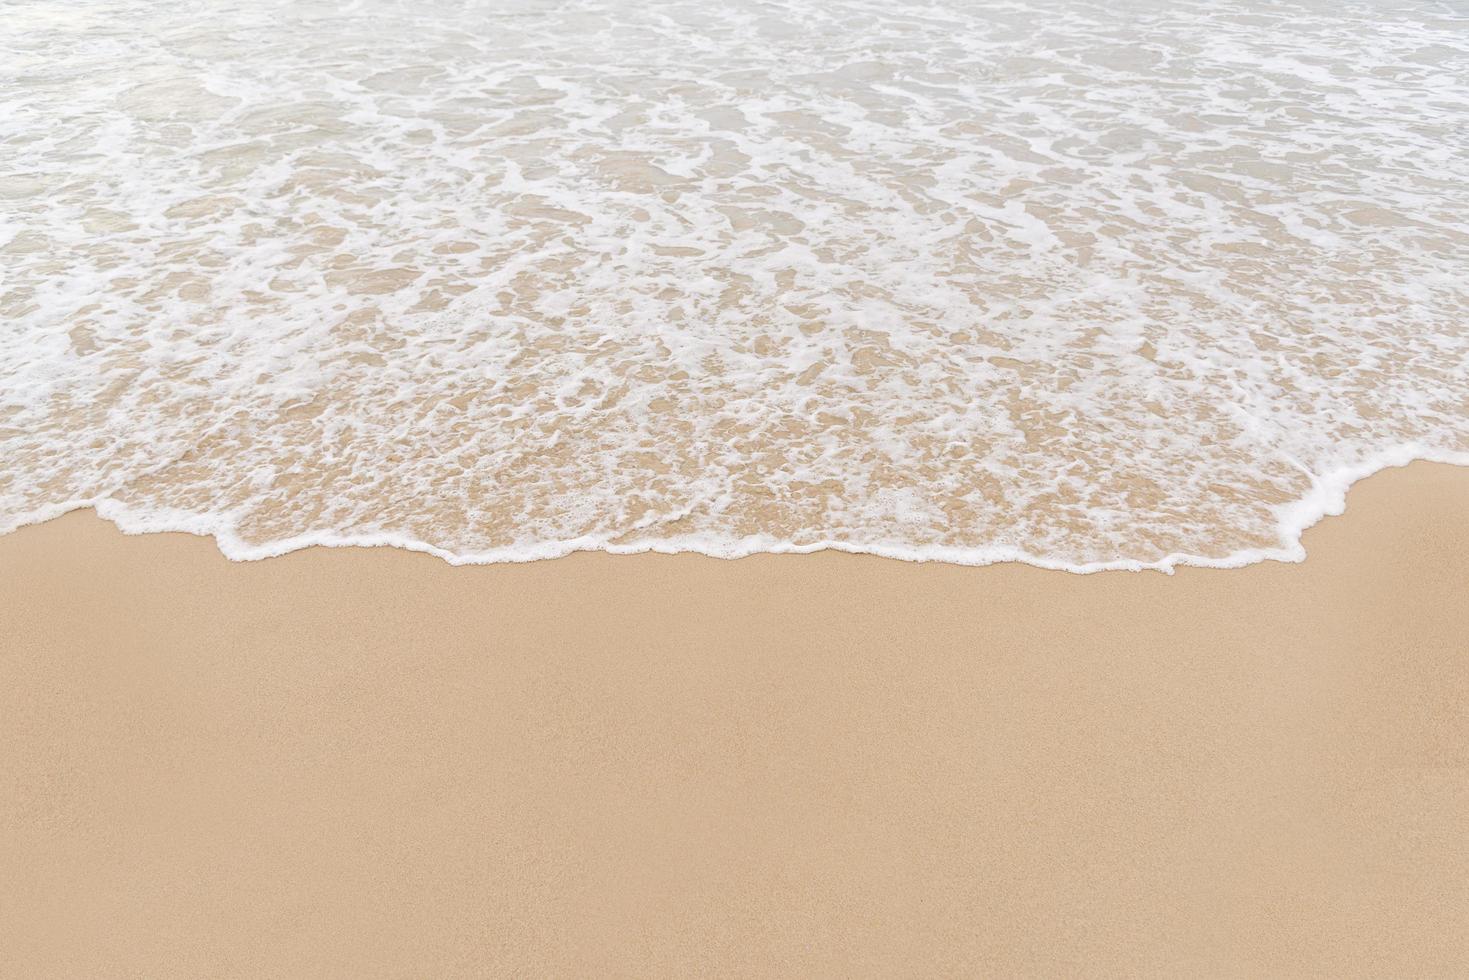 Soft waves on the beach photo